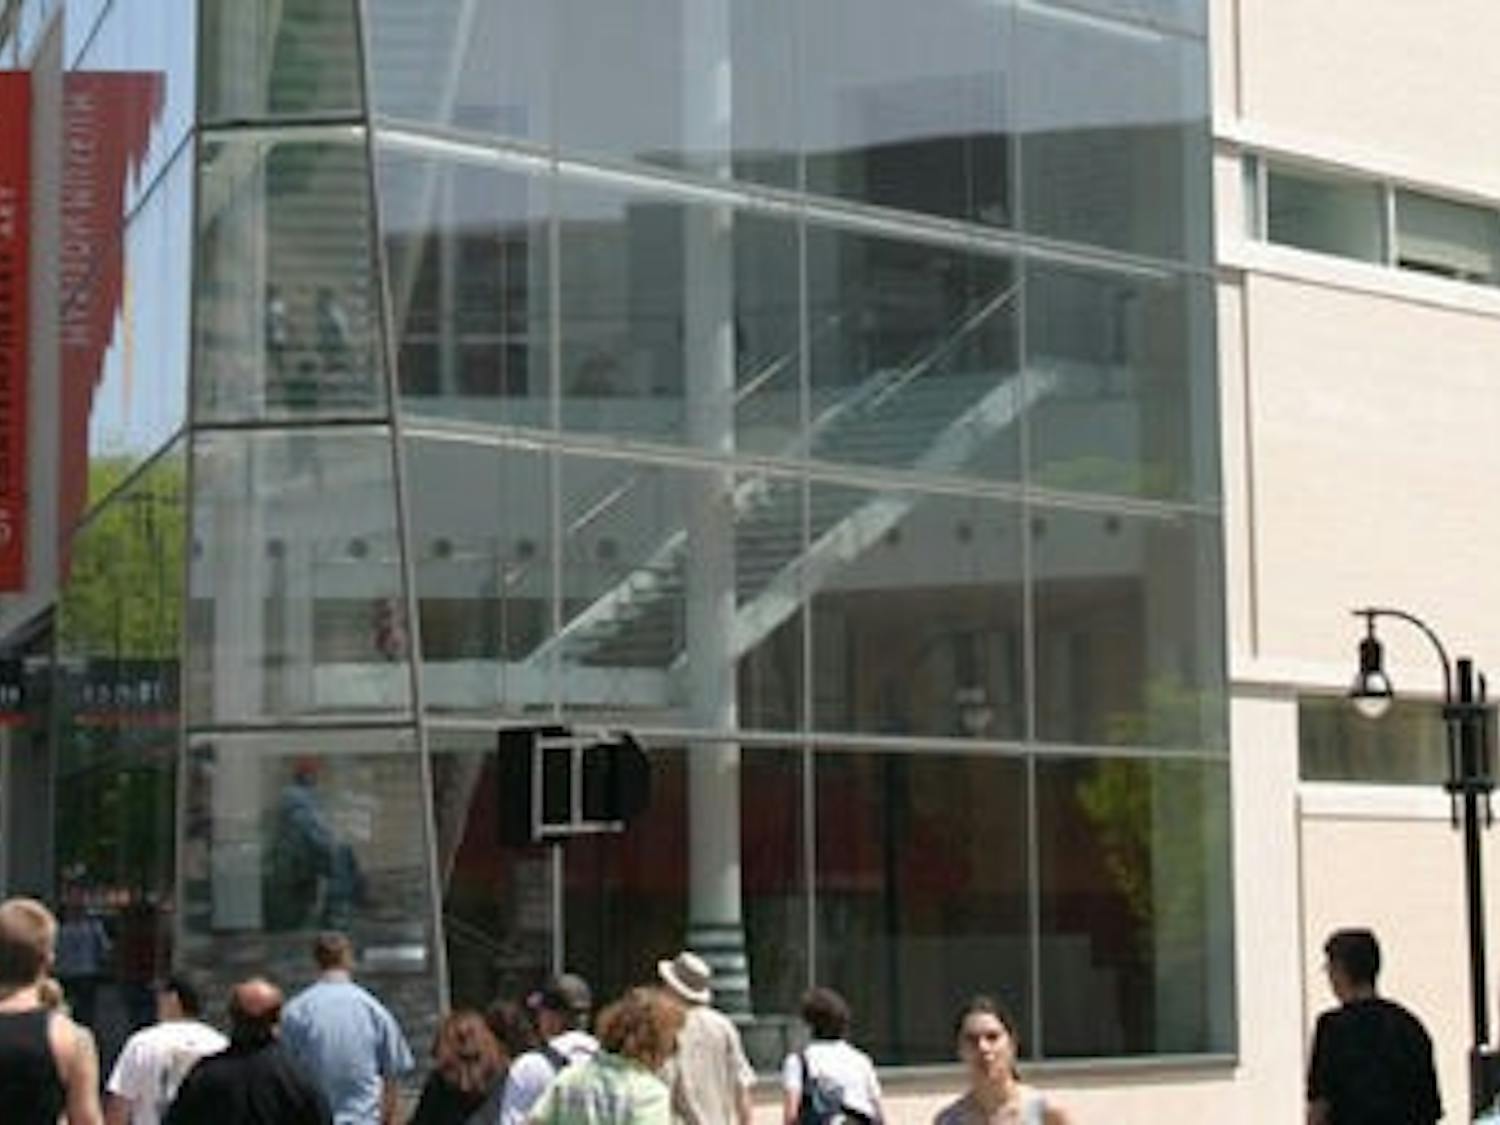 Madison Museum of Contemporary Art